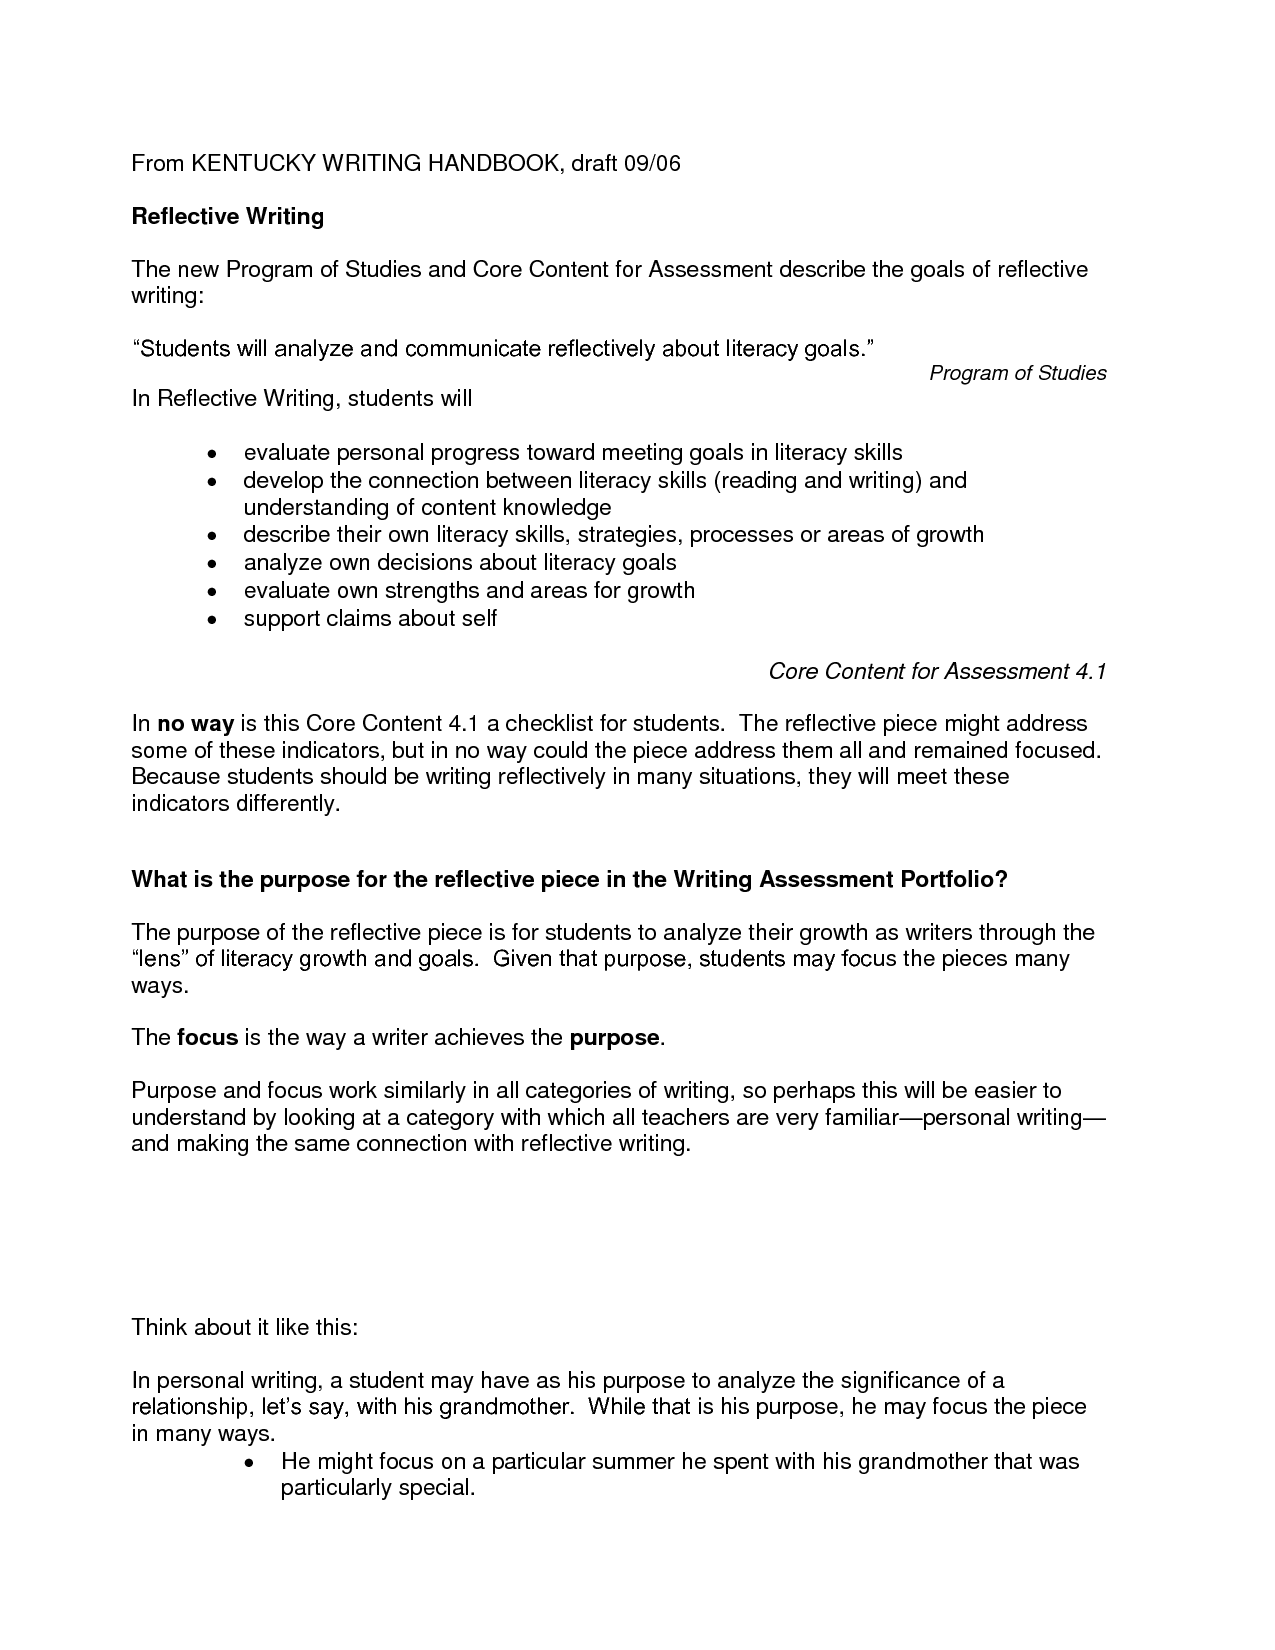 Reflective nursing essay examples